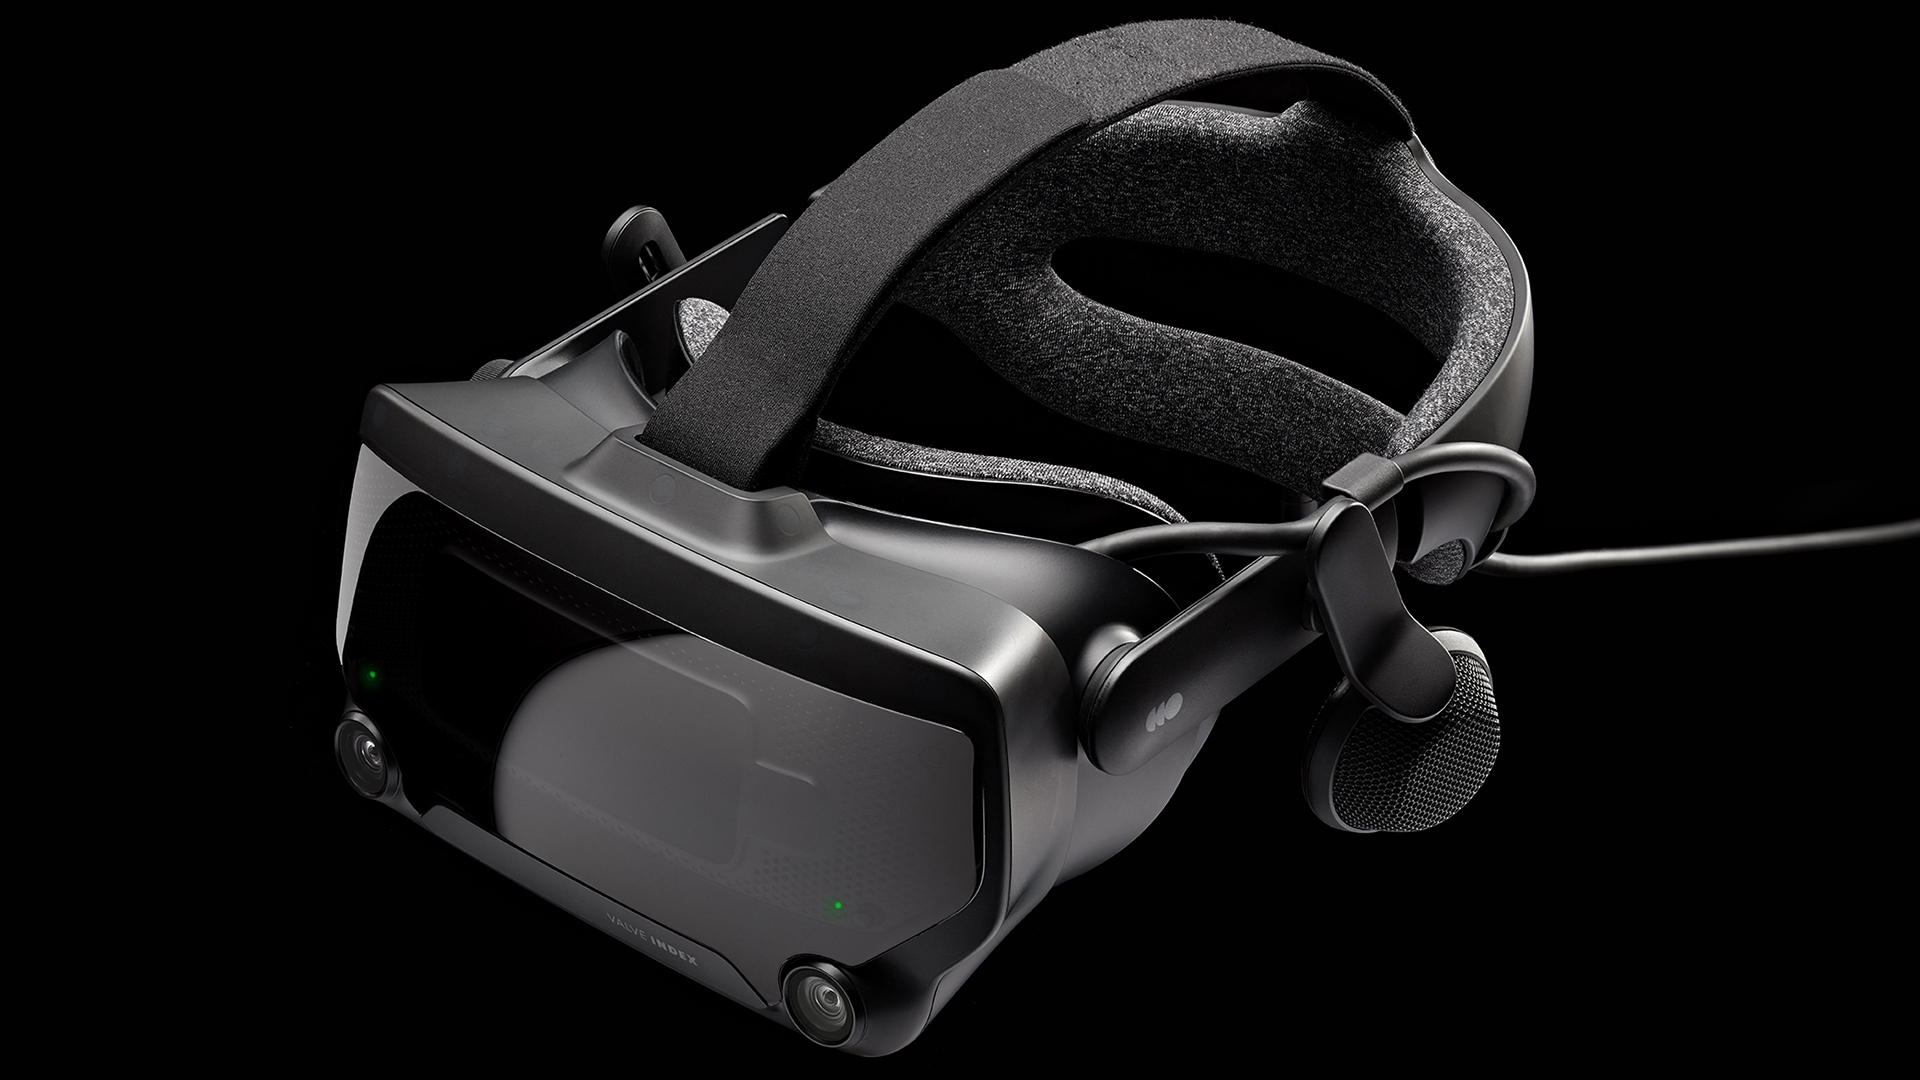 Valve Index VR Kit on Steam